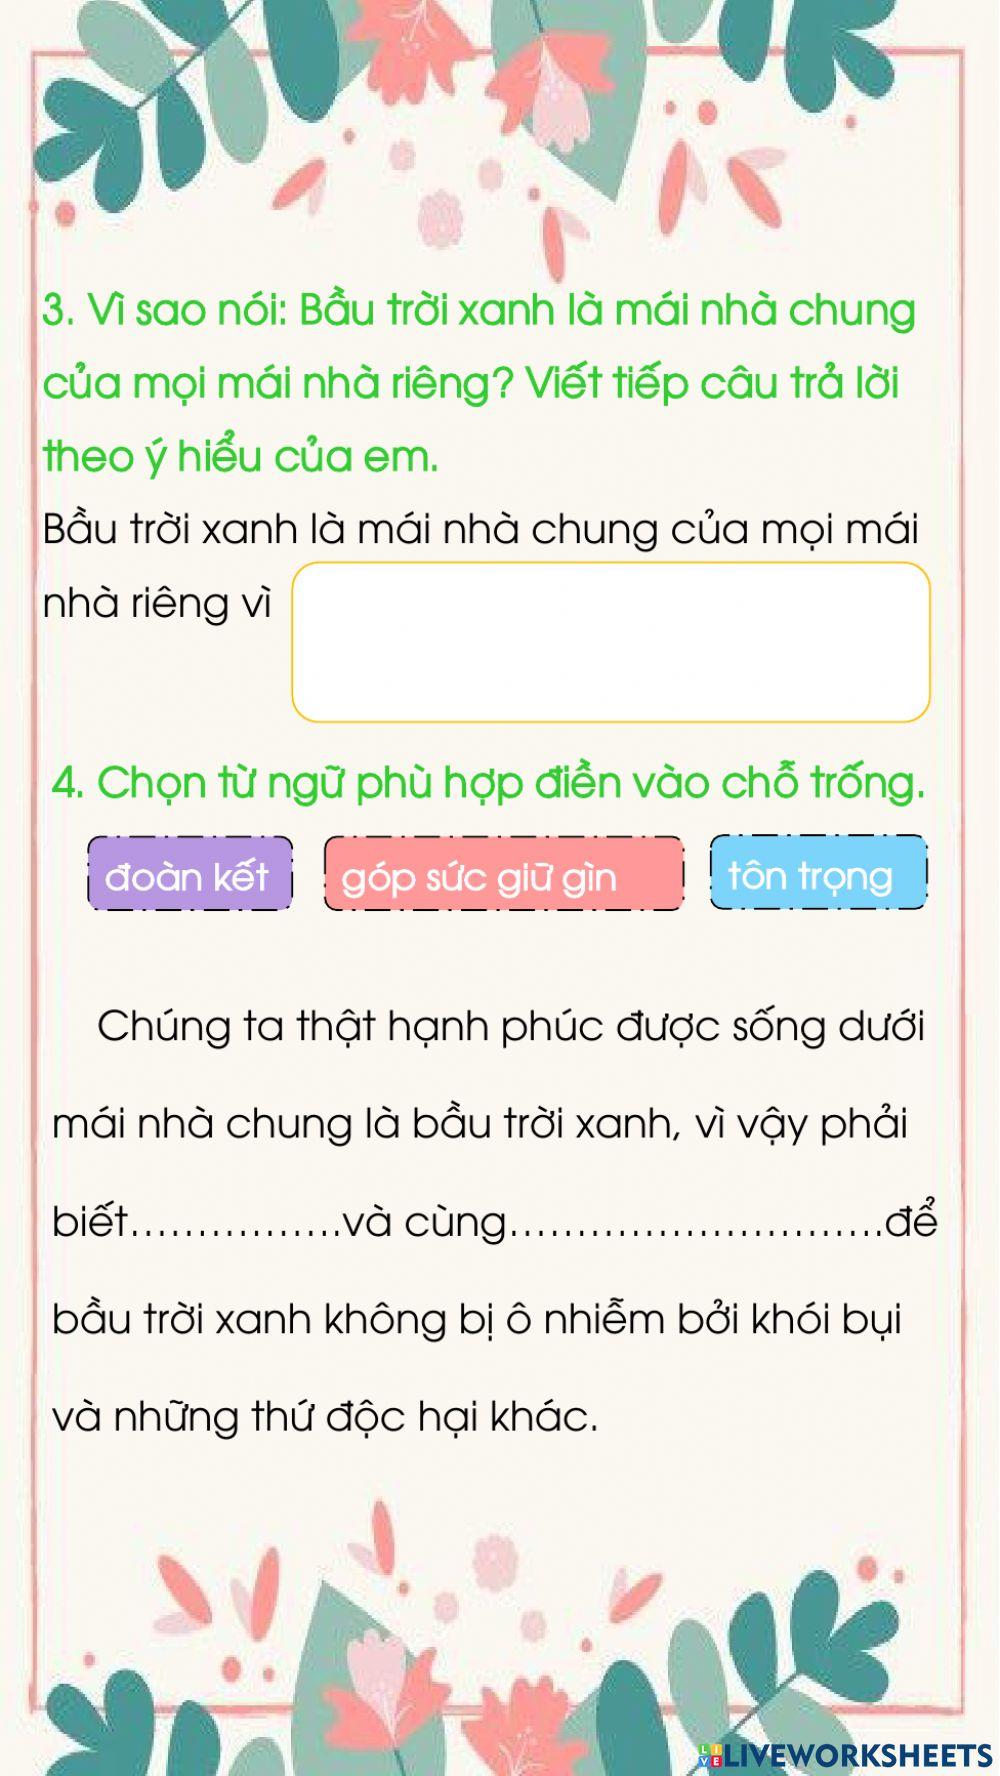 BTCT 26 - Tiếng Việt